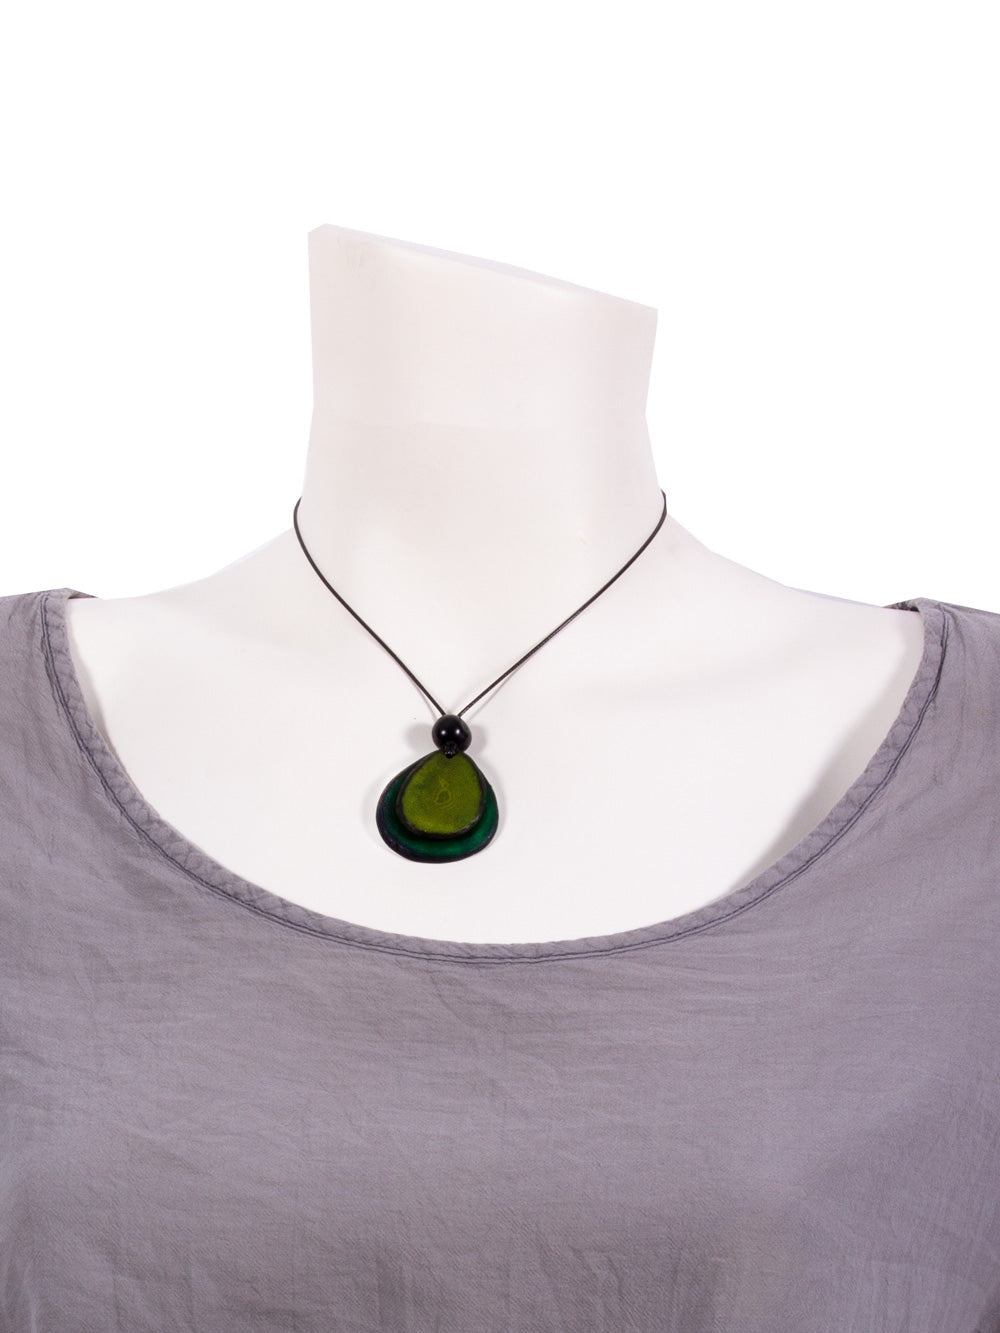 Halskette Chiloete dunkelgrün - La Tagua Nuss